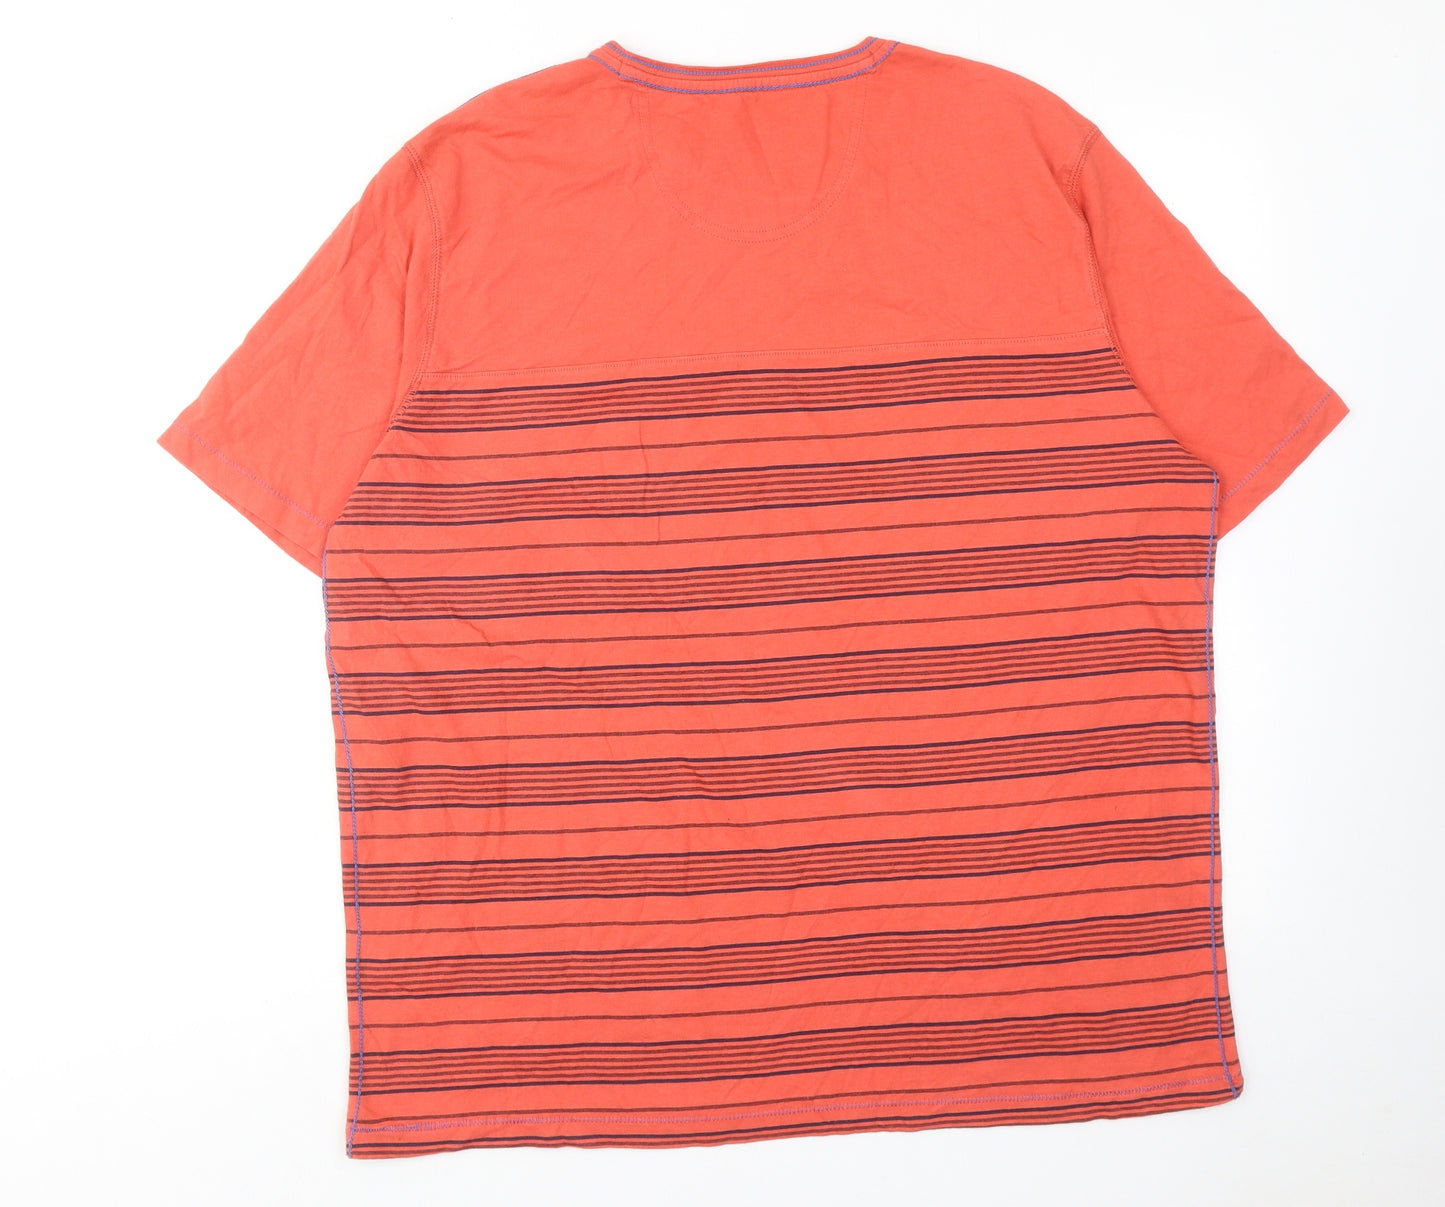 North Coast Mens Red Striped Cotton T-Shirt Size XL Round Neck